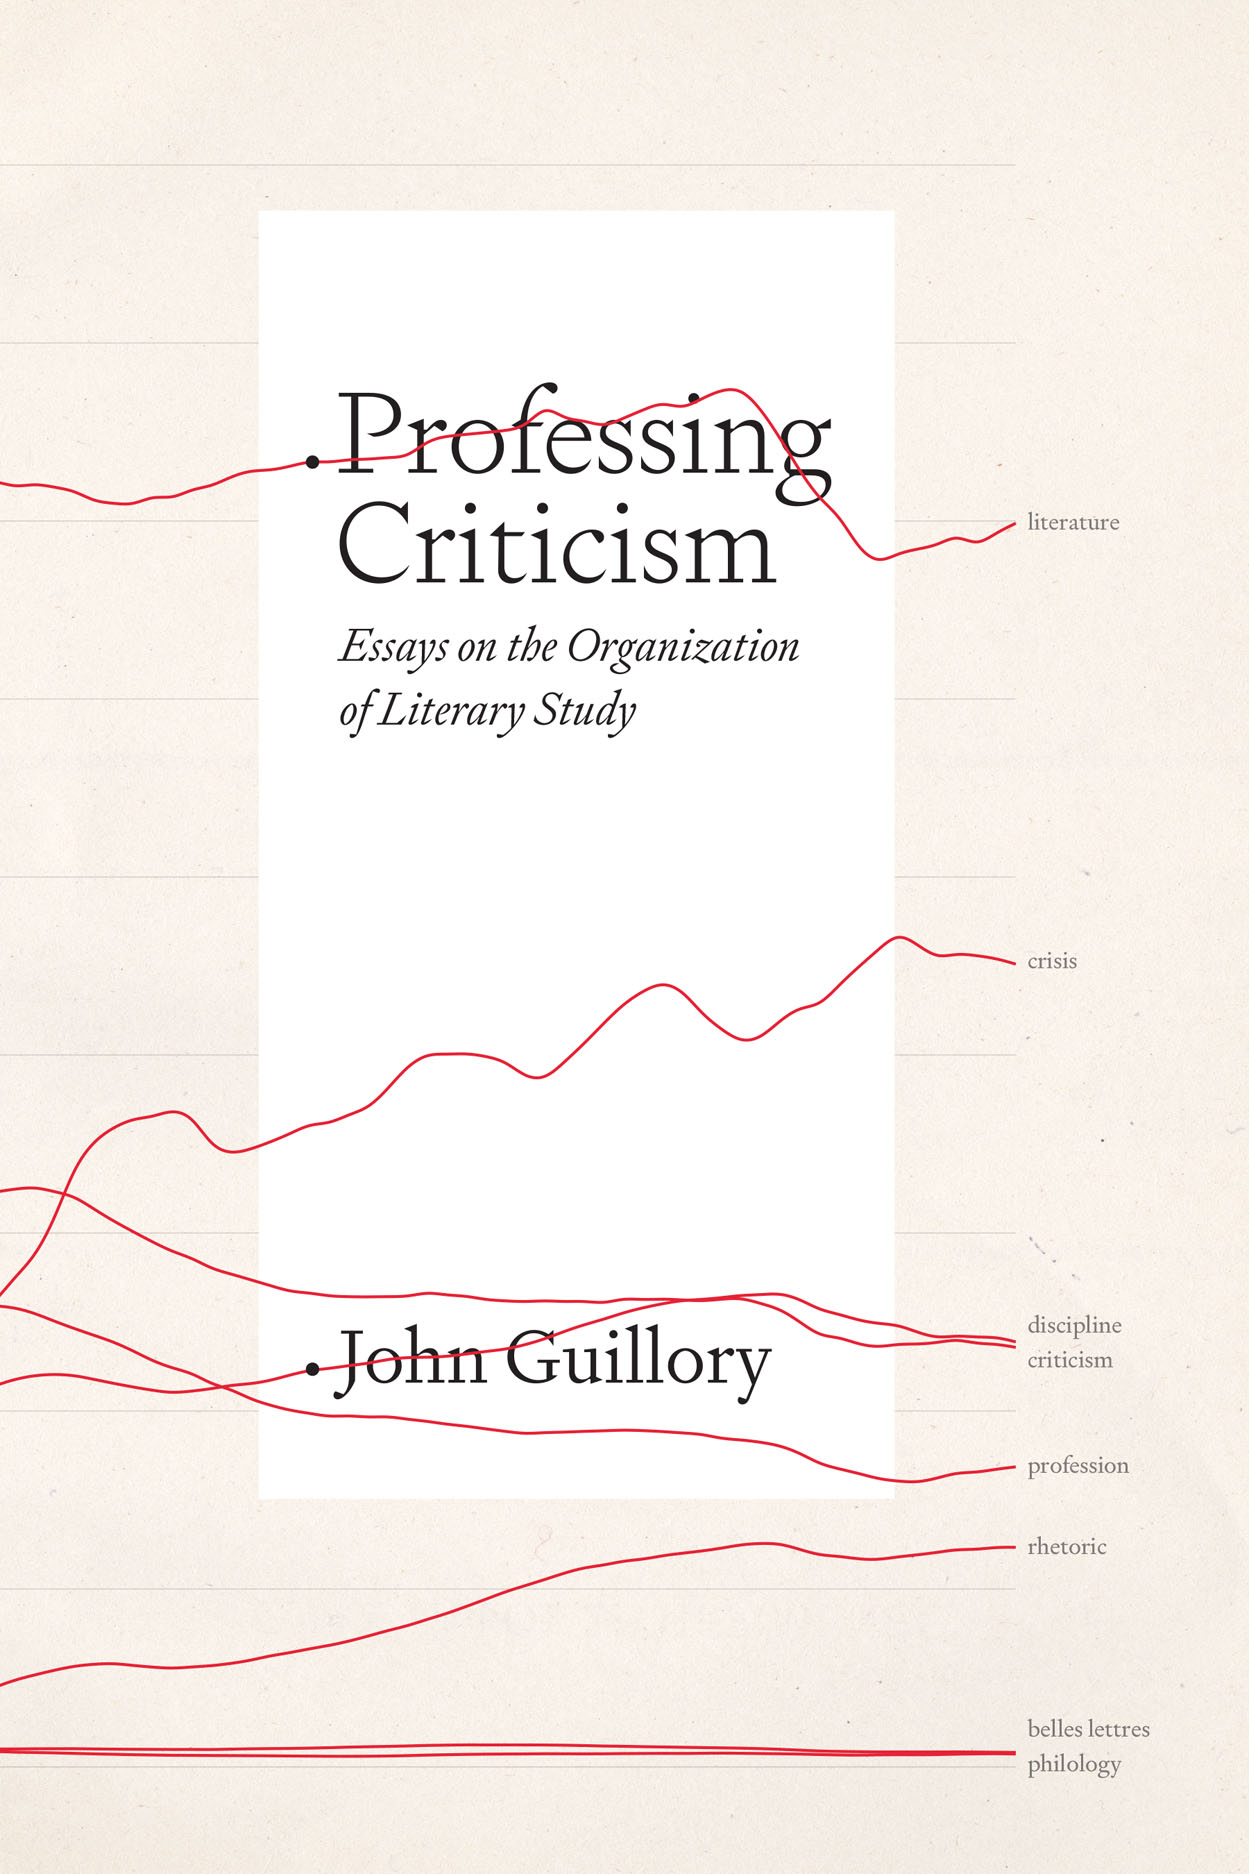 Professing Criticism: Essays on the organization of literary study